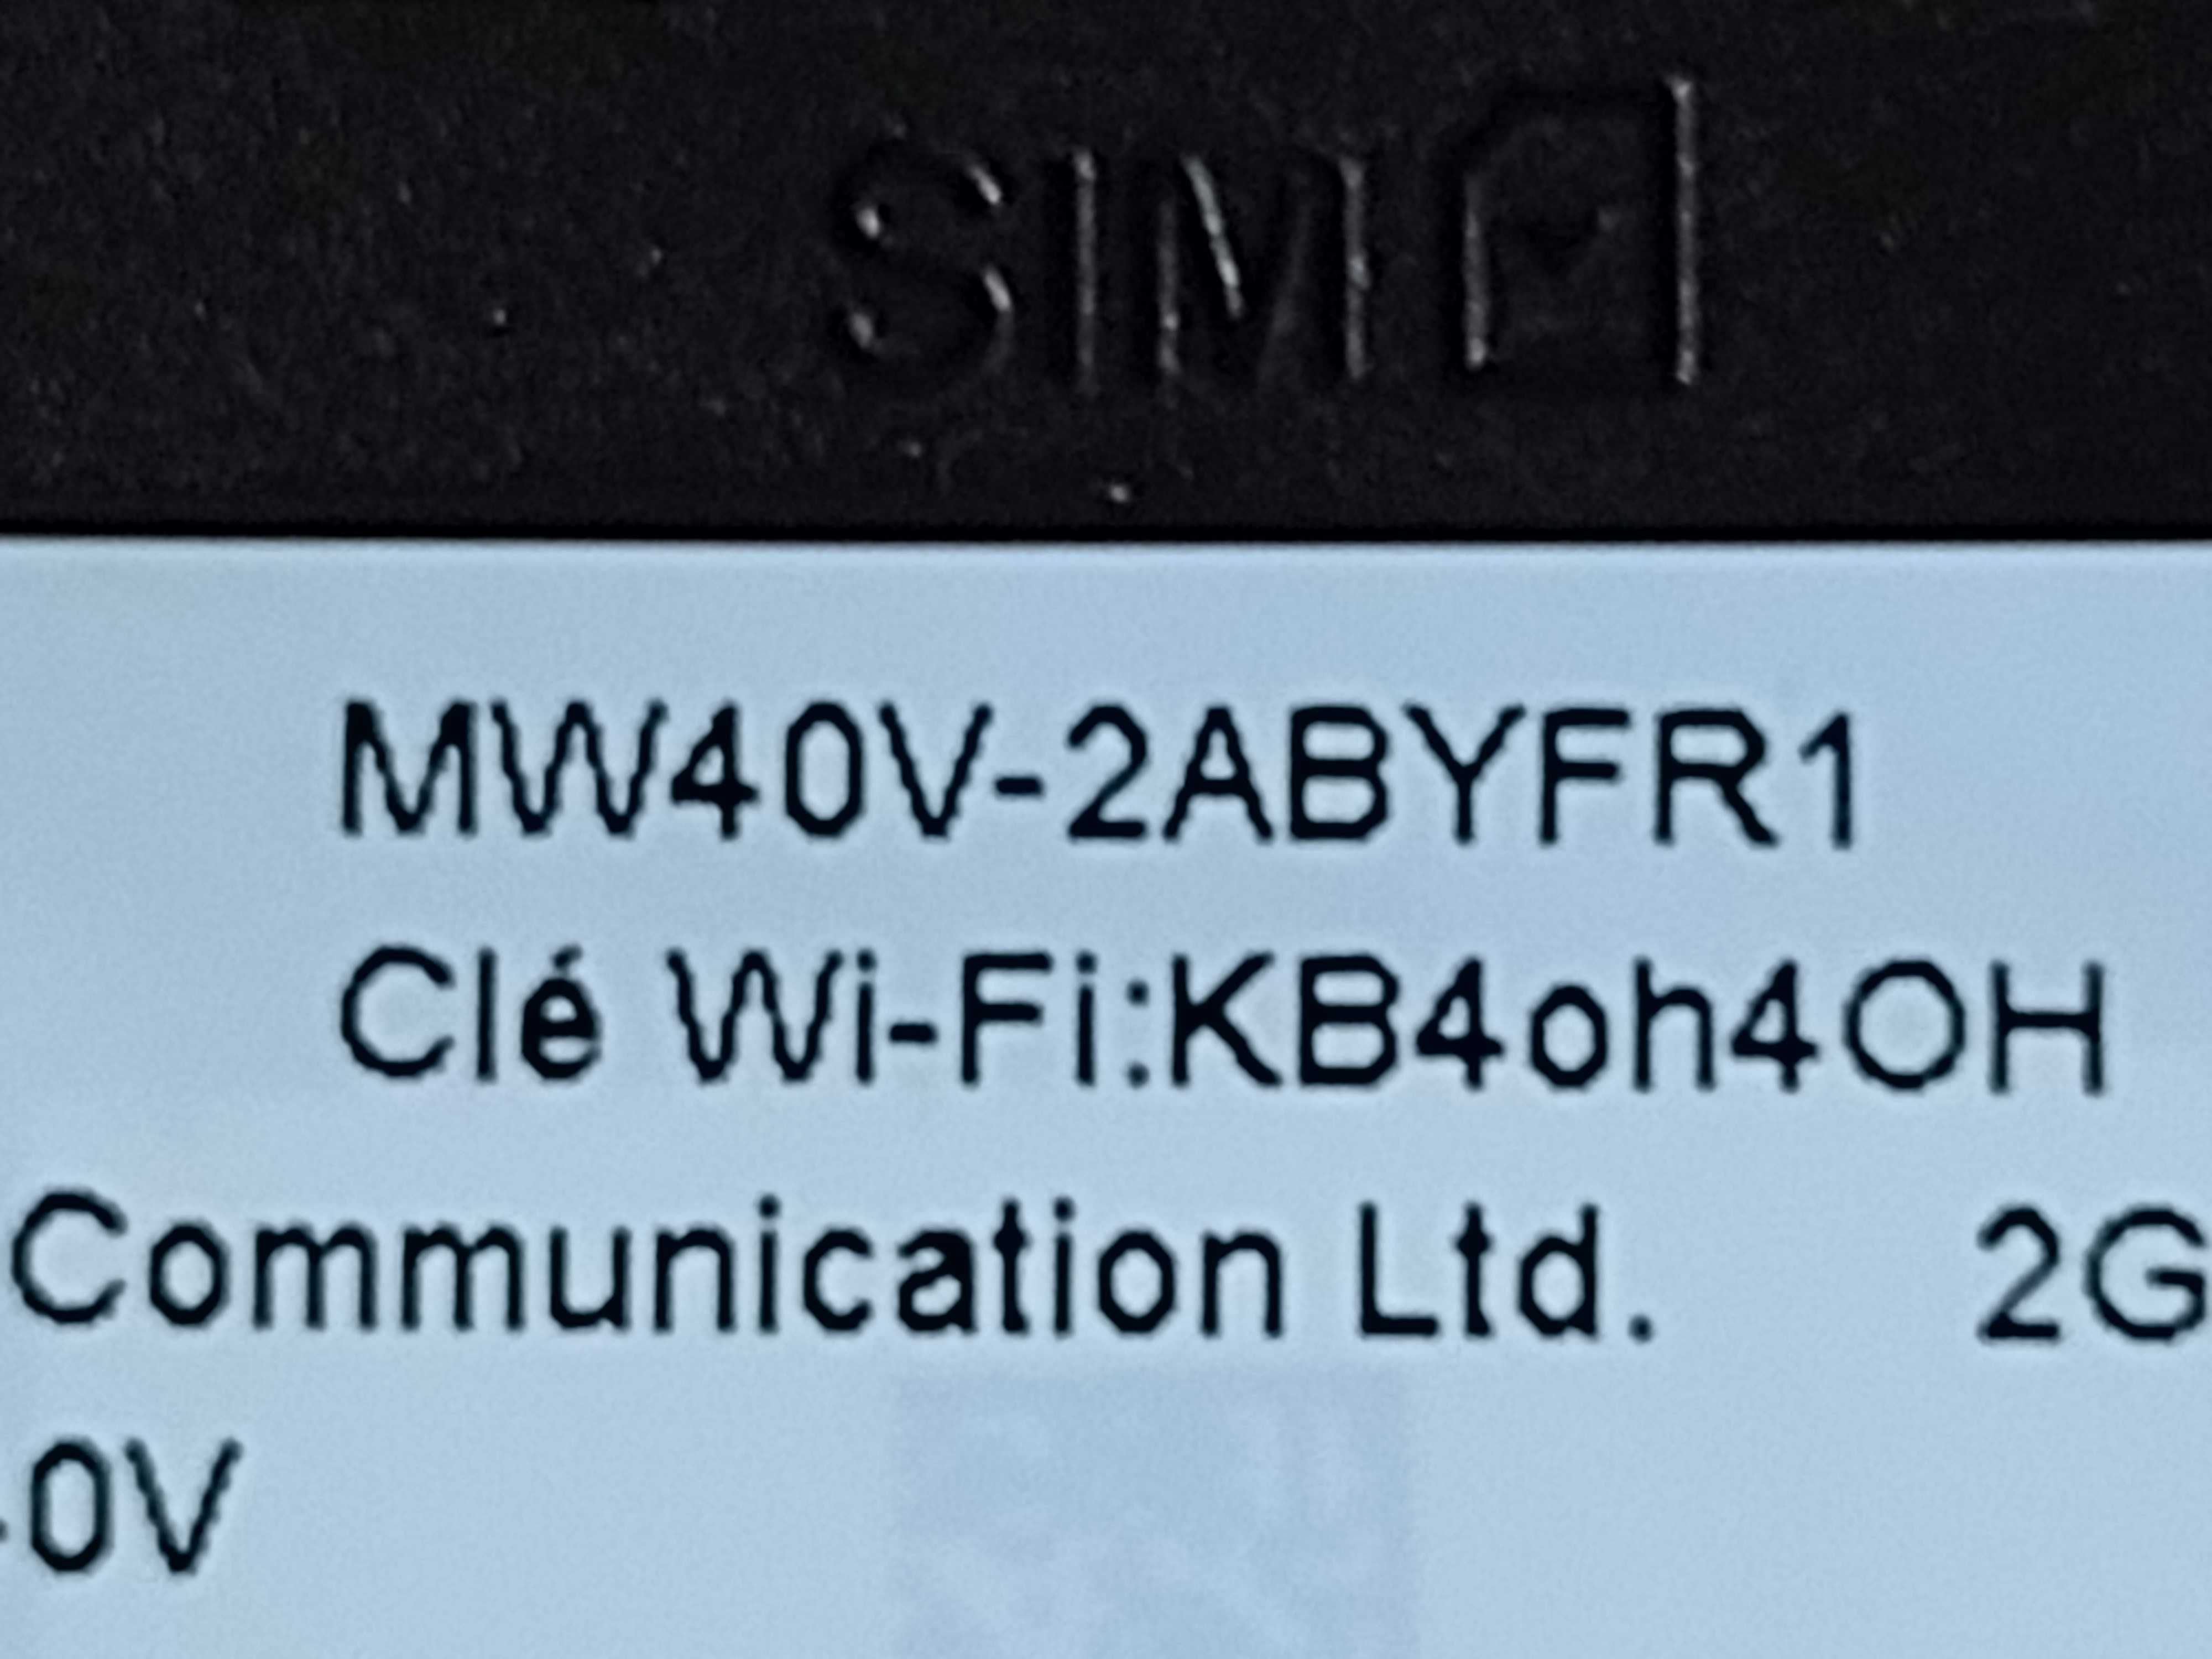 Router Modem internet WiFi cartela SIM 4G LTE Alcatel MW40V